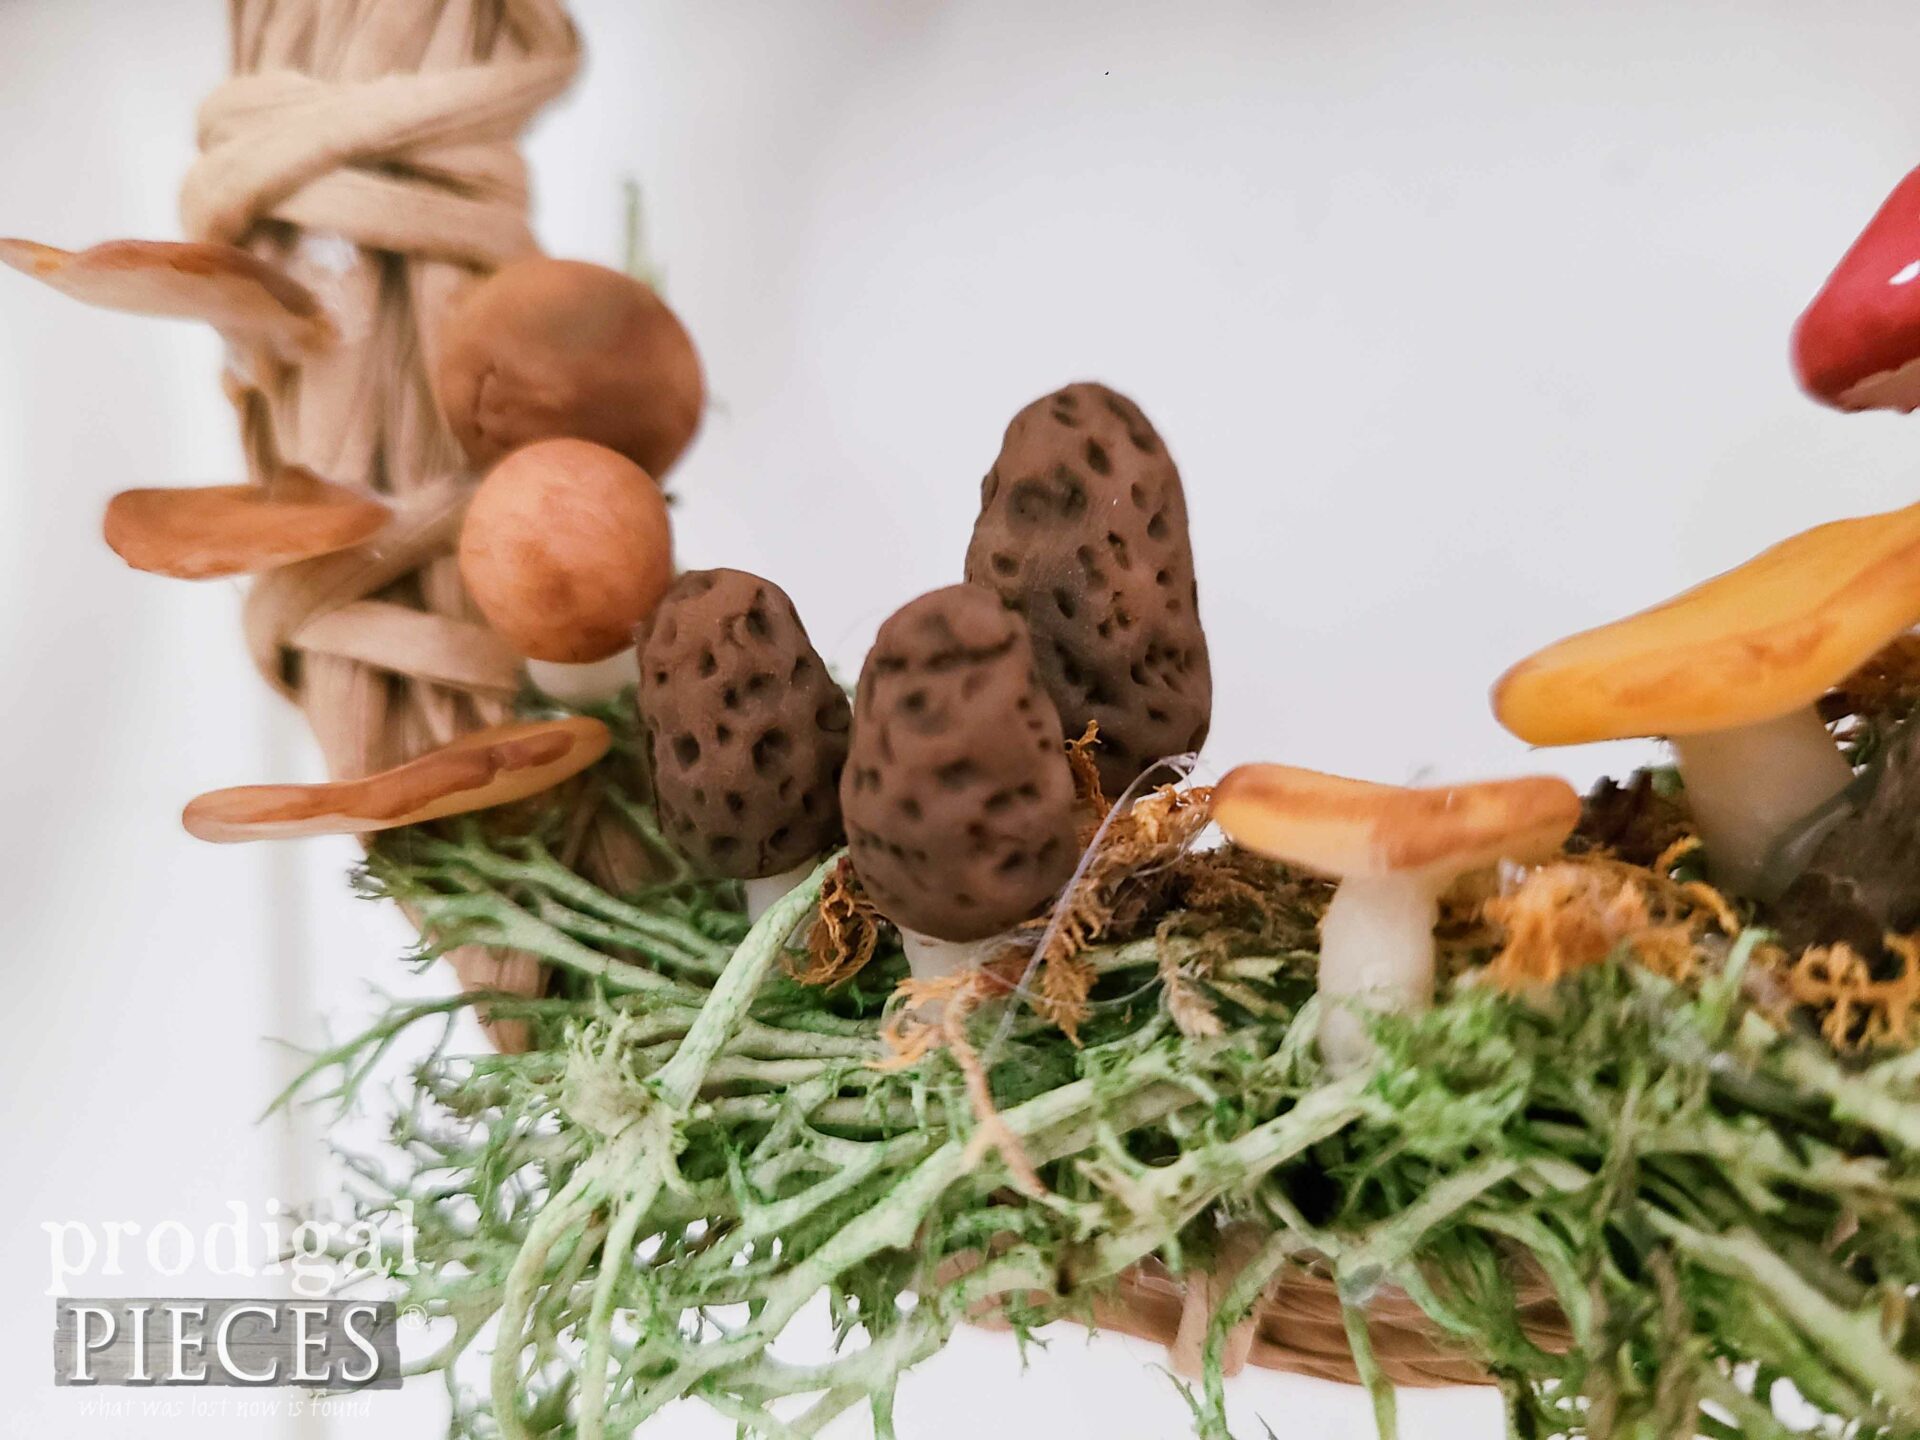 Mini Morel Mushrooms in Wreath by Larissa of Prodigal Pieces | prodigalpieces.com #prodigalpieces #mushrooms #crafts #spring